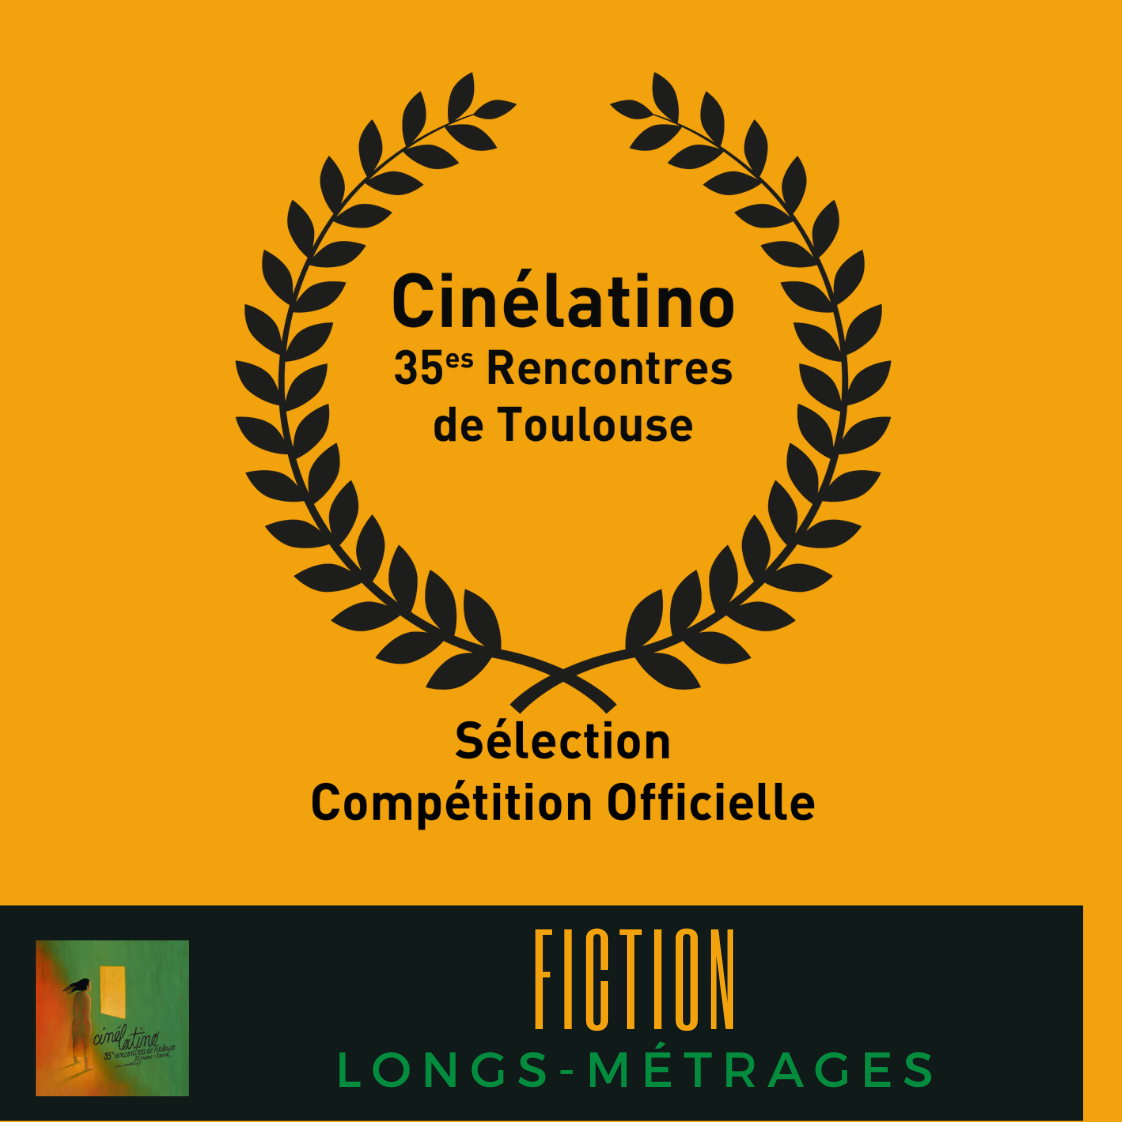 cinelatino_fiction